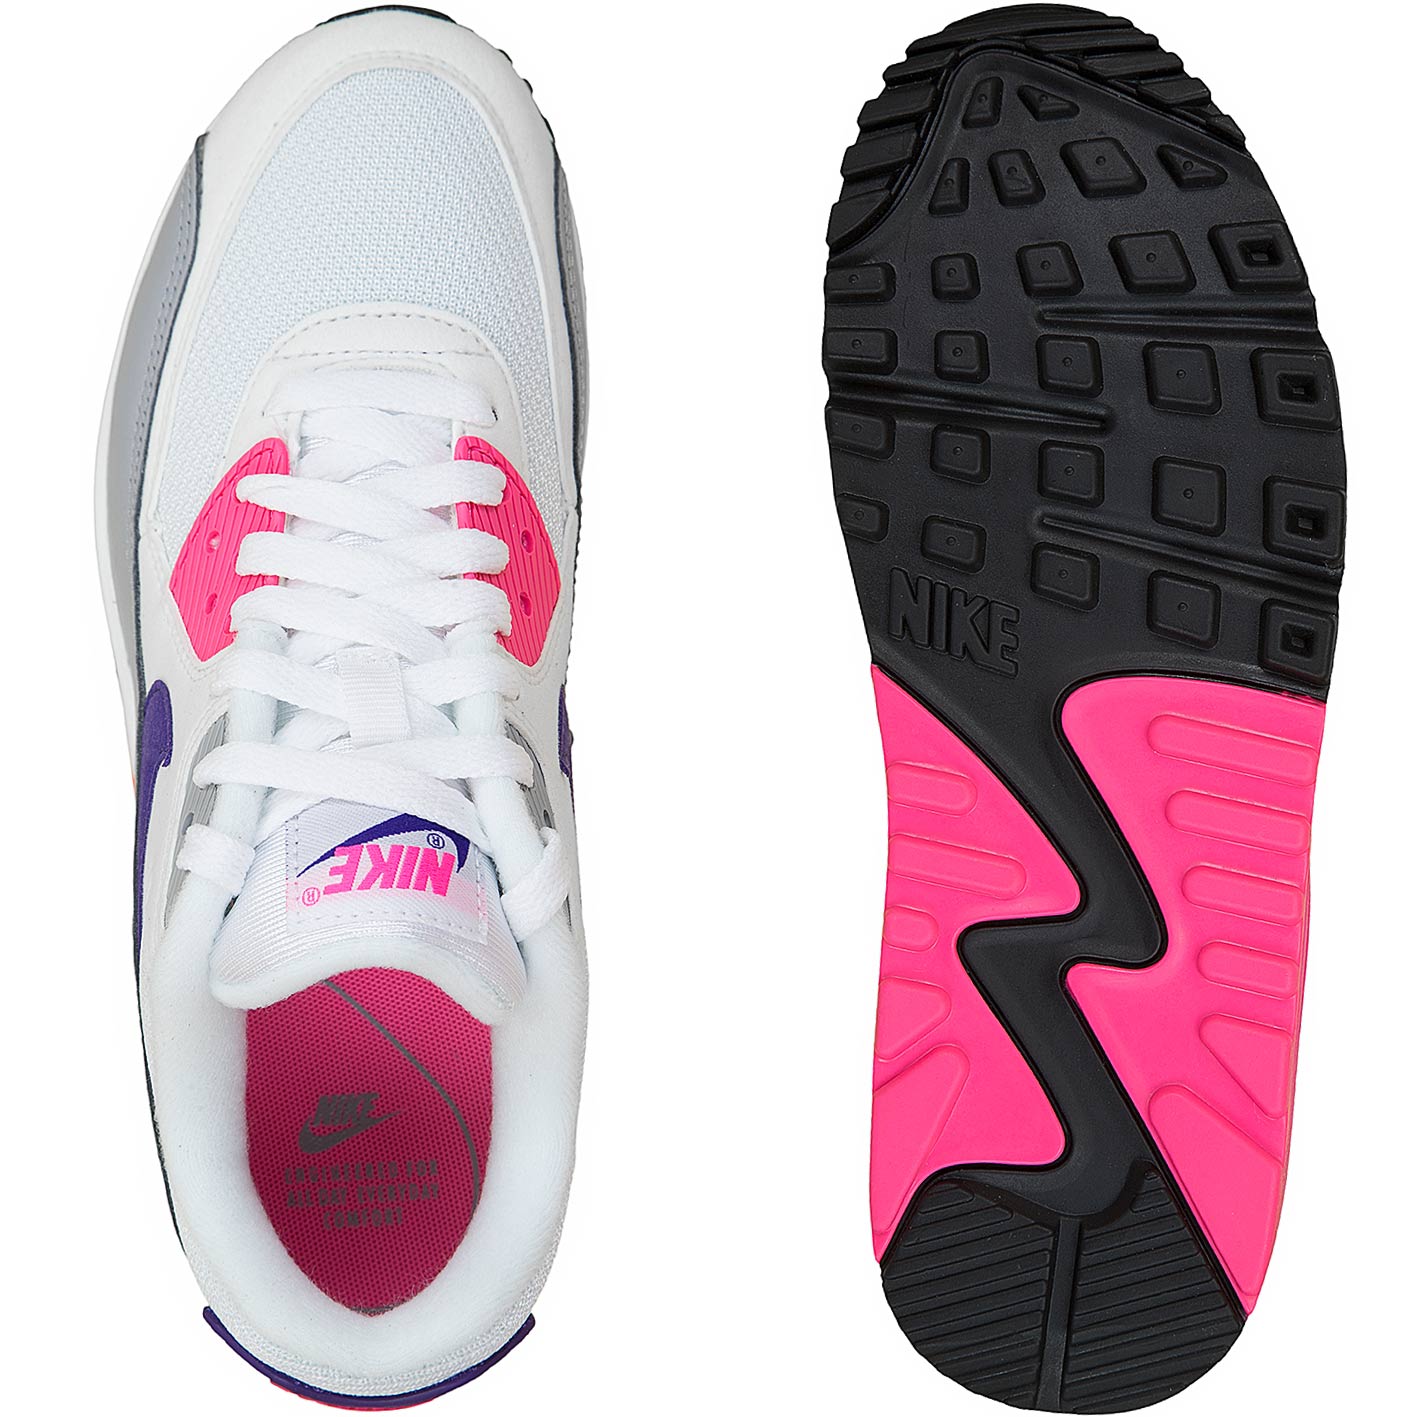 ☆ Nike Damen Sneaker Air Max 90 weiß/pink - hier bestellen!